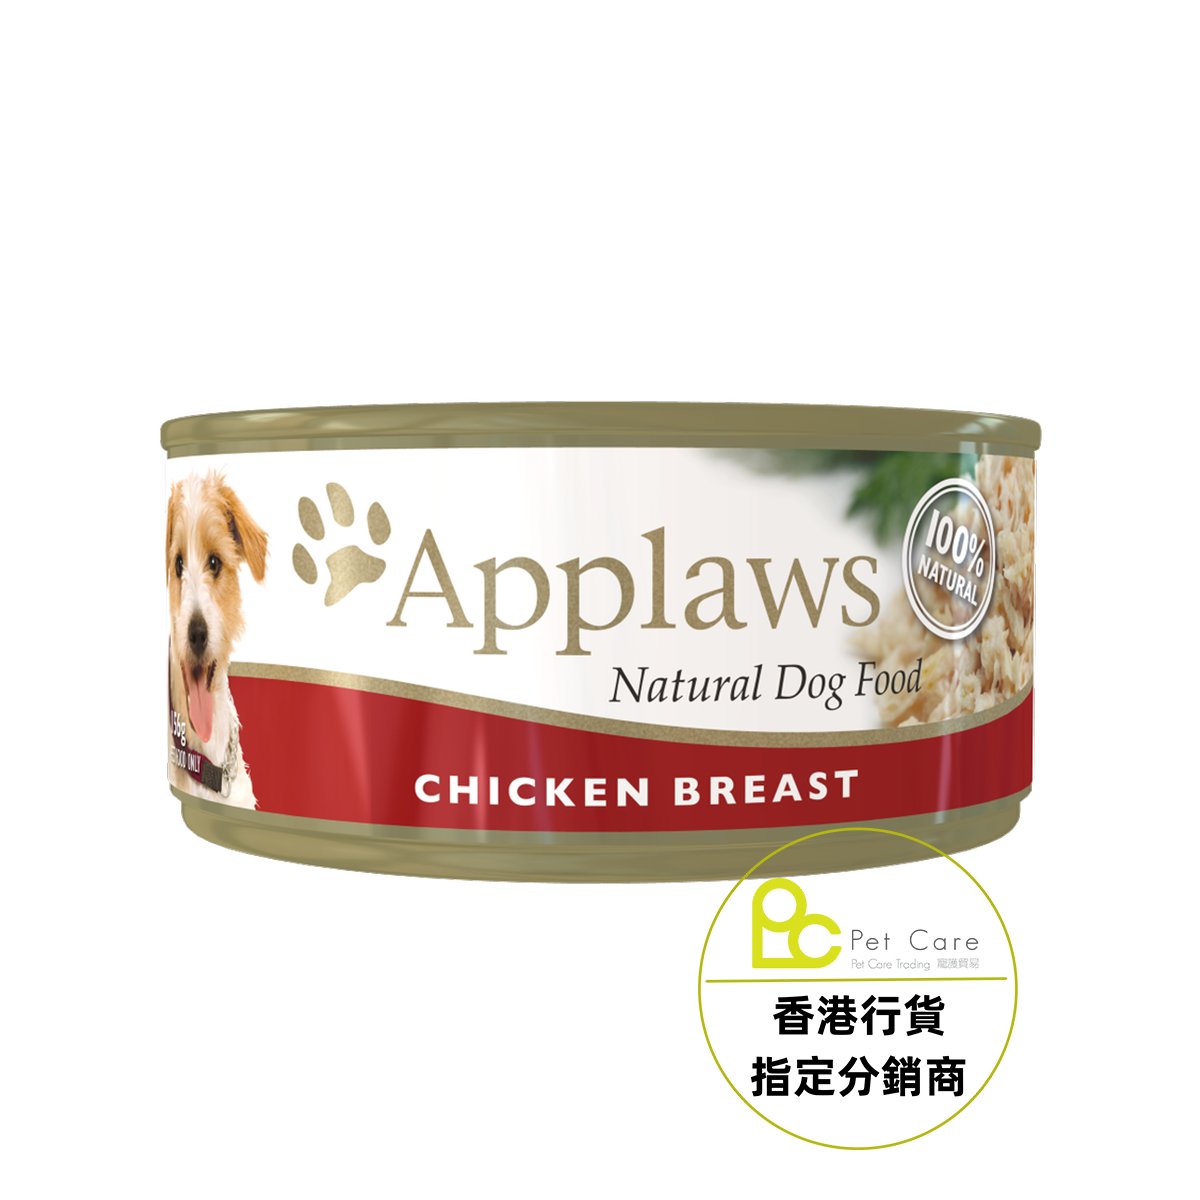 Applaws Dog 全天然 狗罐頭 - 雞柳 156g